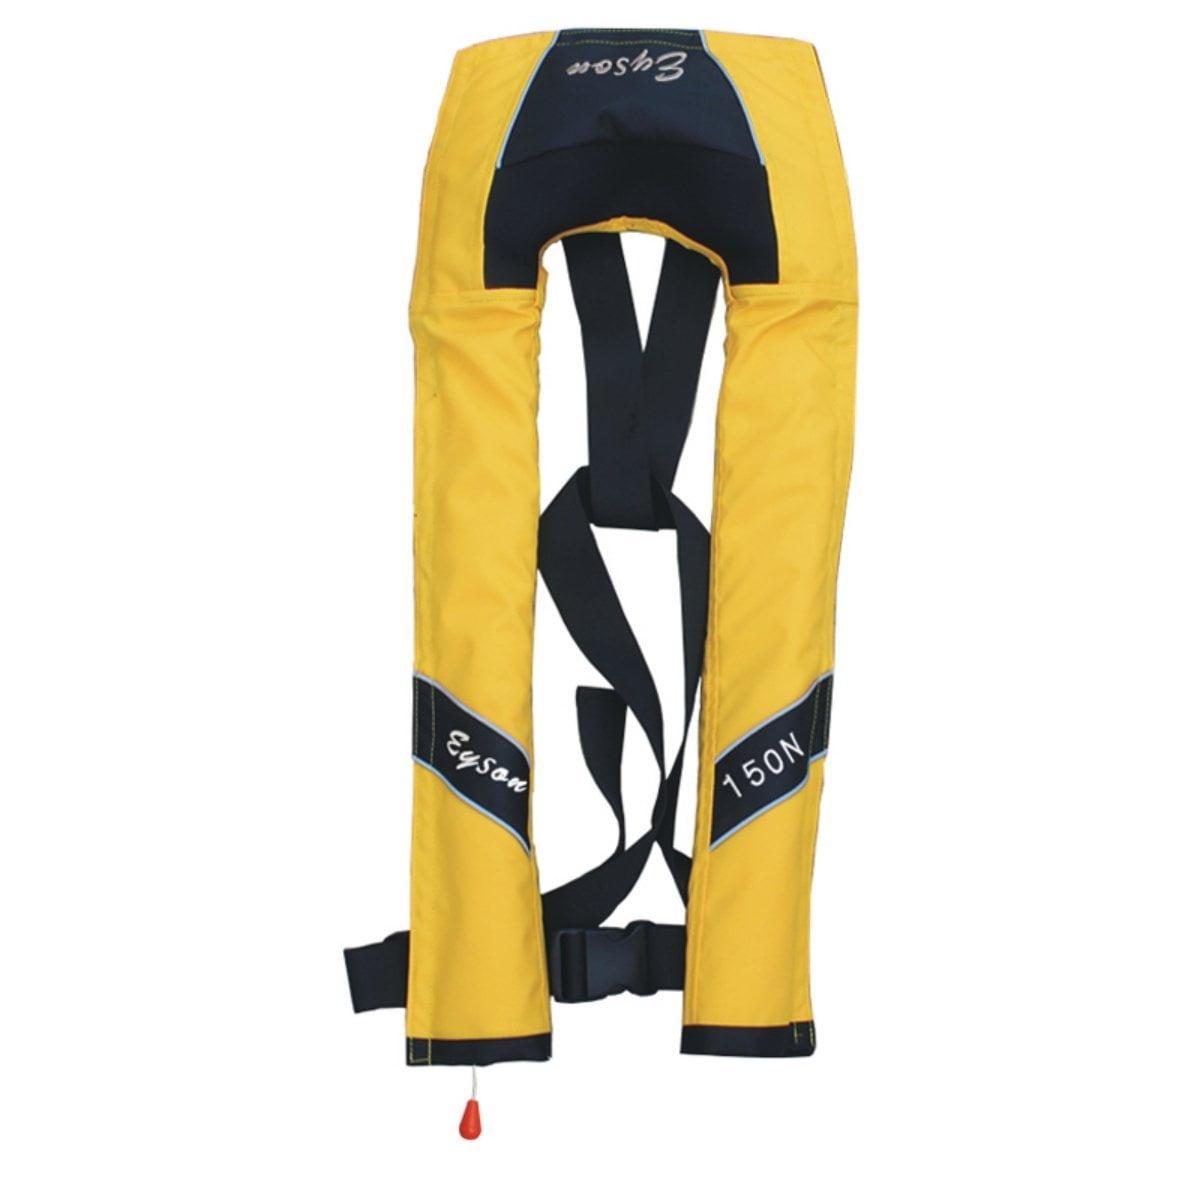 Details about   Premium Adult Inflatable Life Jacket Vest Lifesaving PFD C02 Cartridge Red 